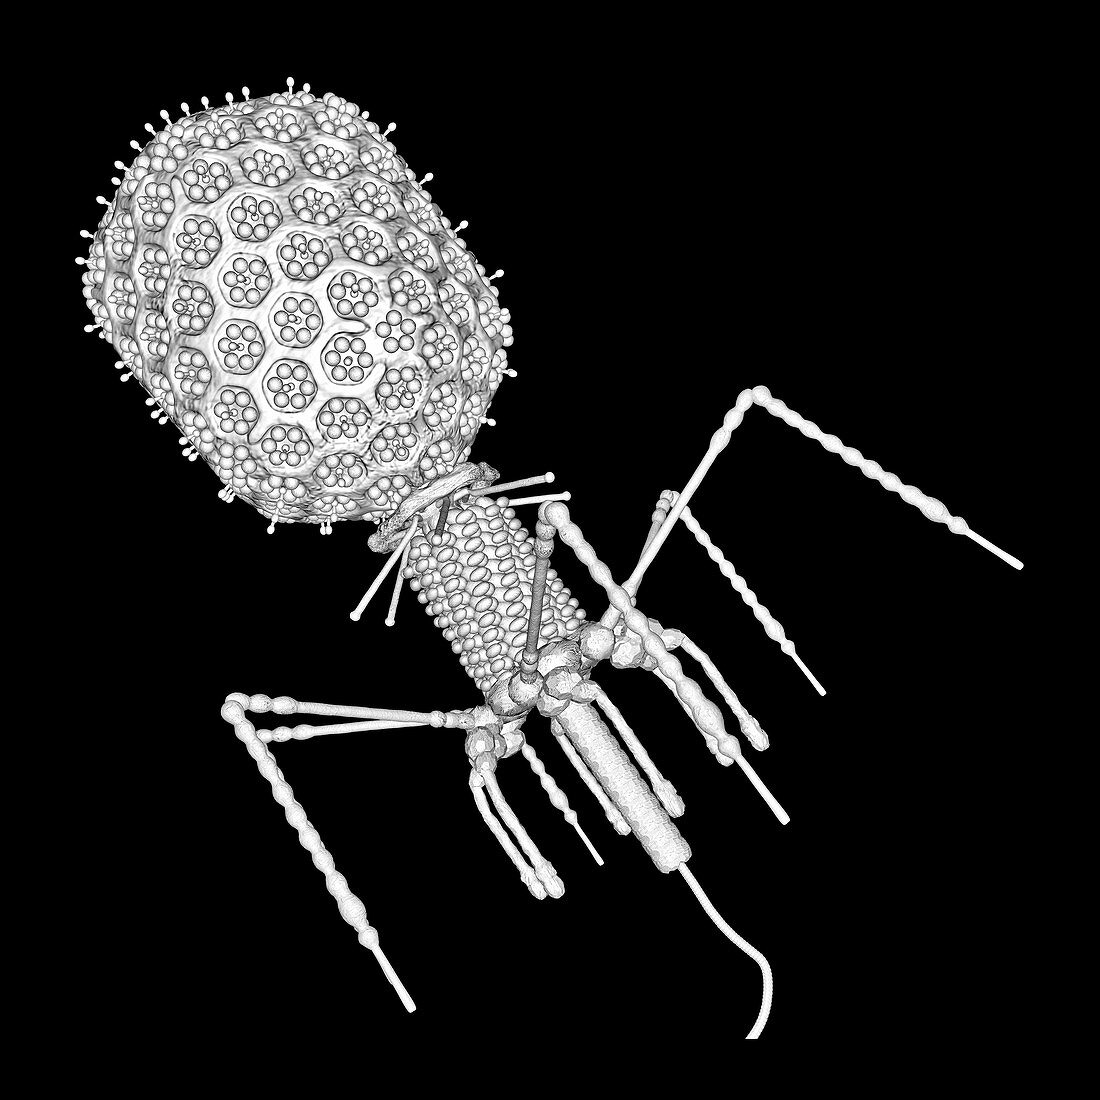 Bacteriophage T4,illustration